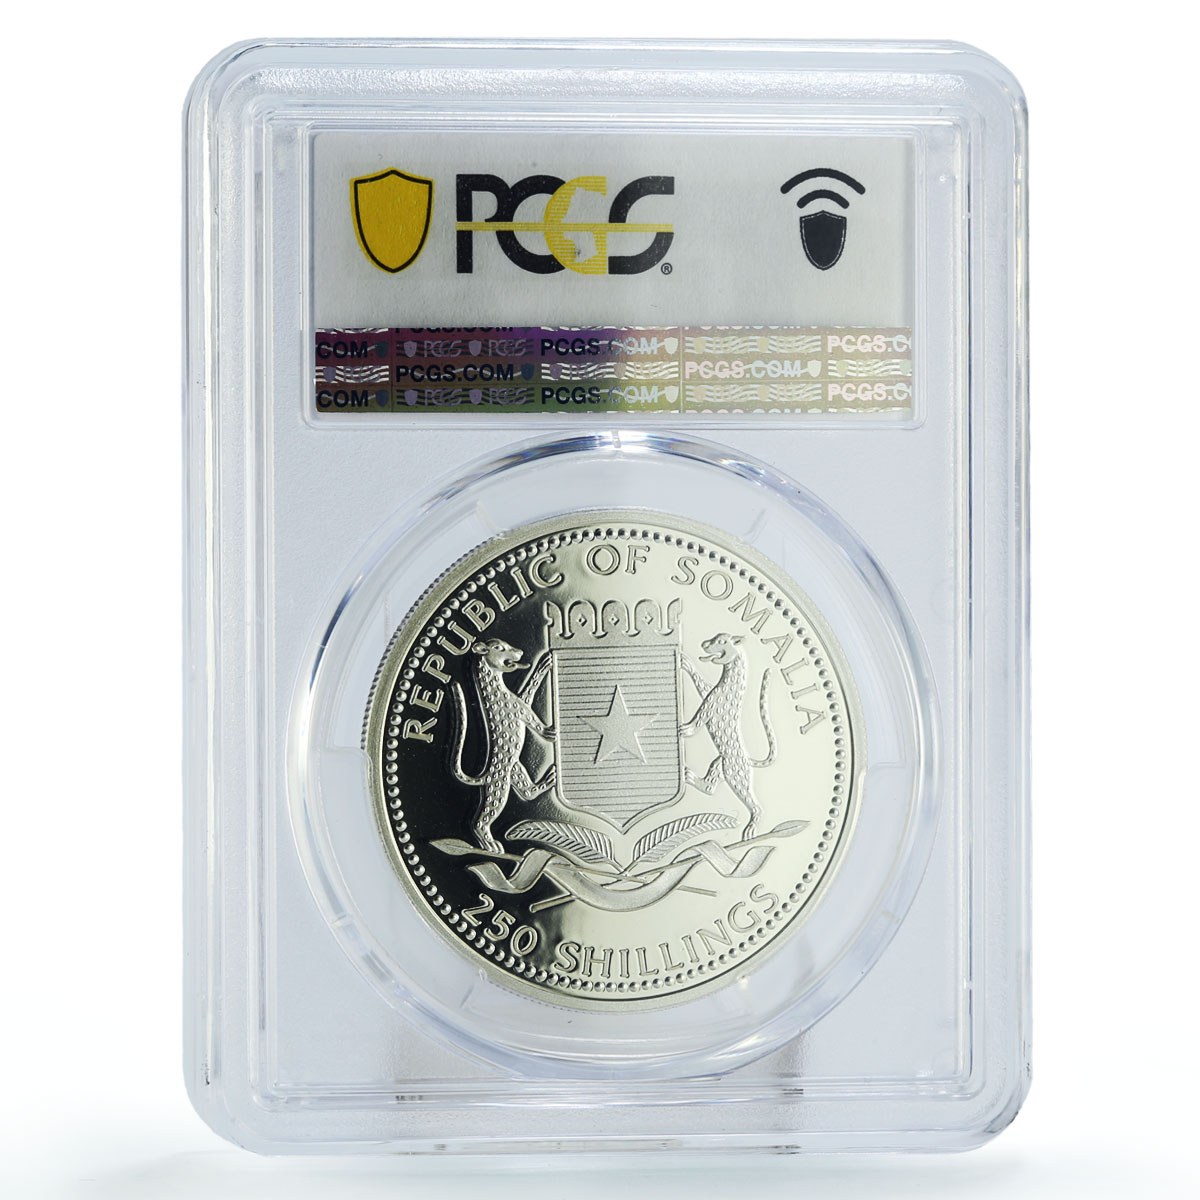 Somalia 250 shillings Conservation Wildlife Penguins PR70 PCGS silver coin 2000